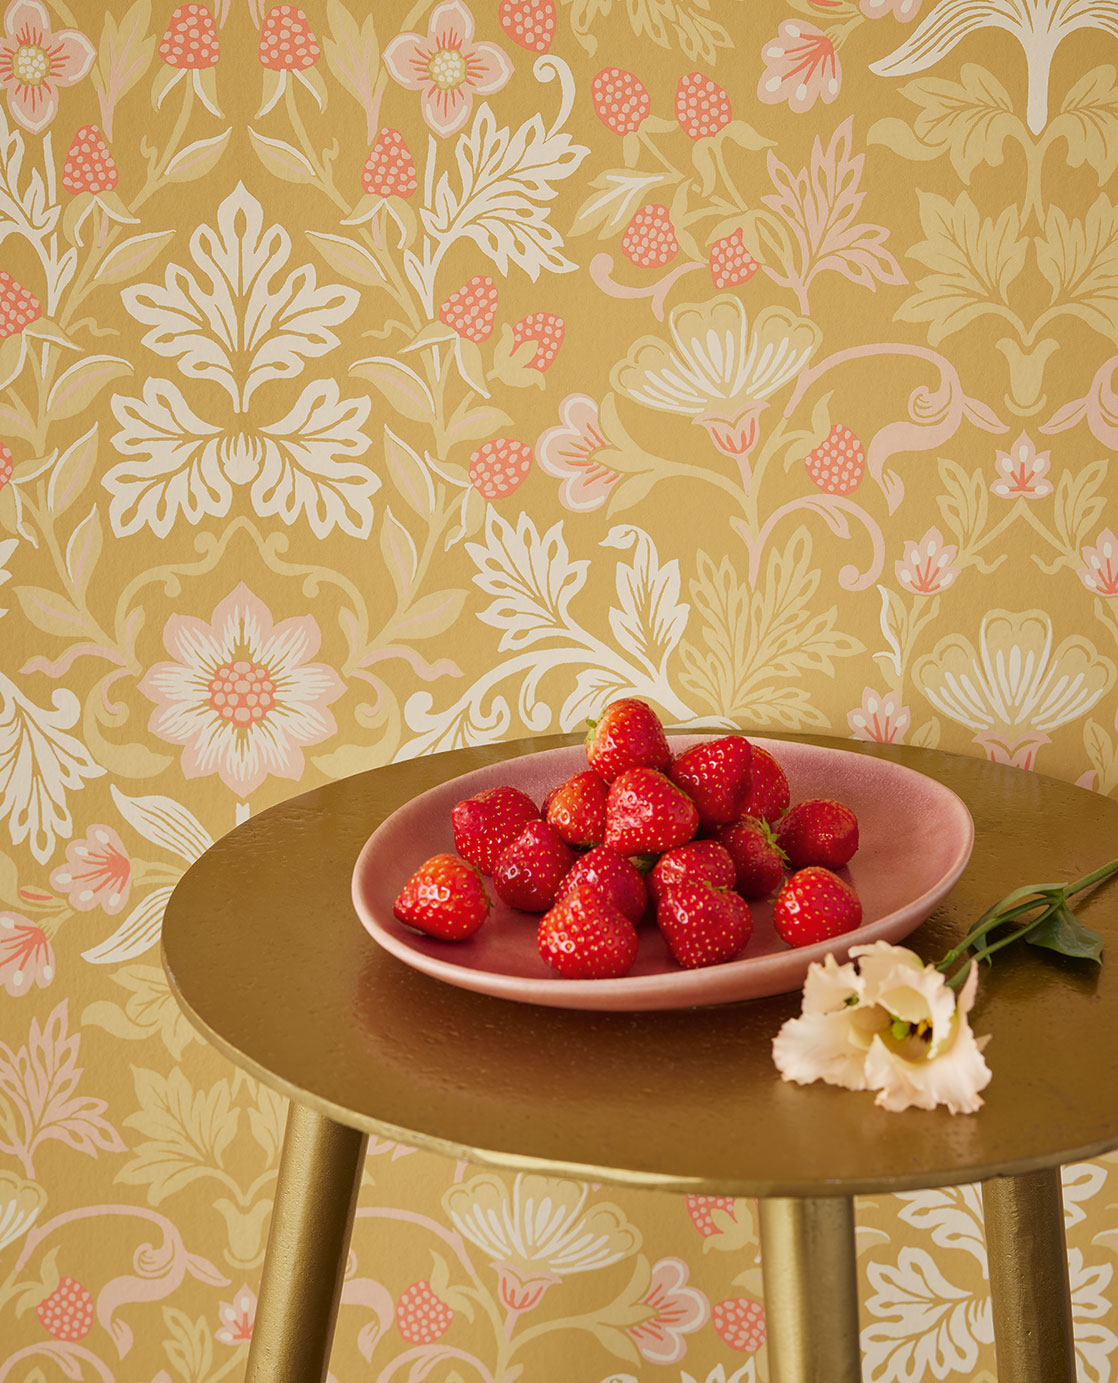 Posy Strawberry Fields Floral wallpaper